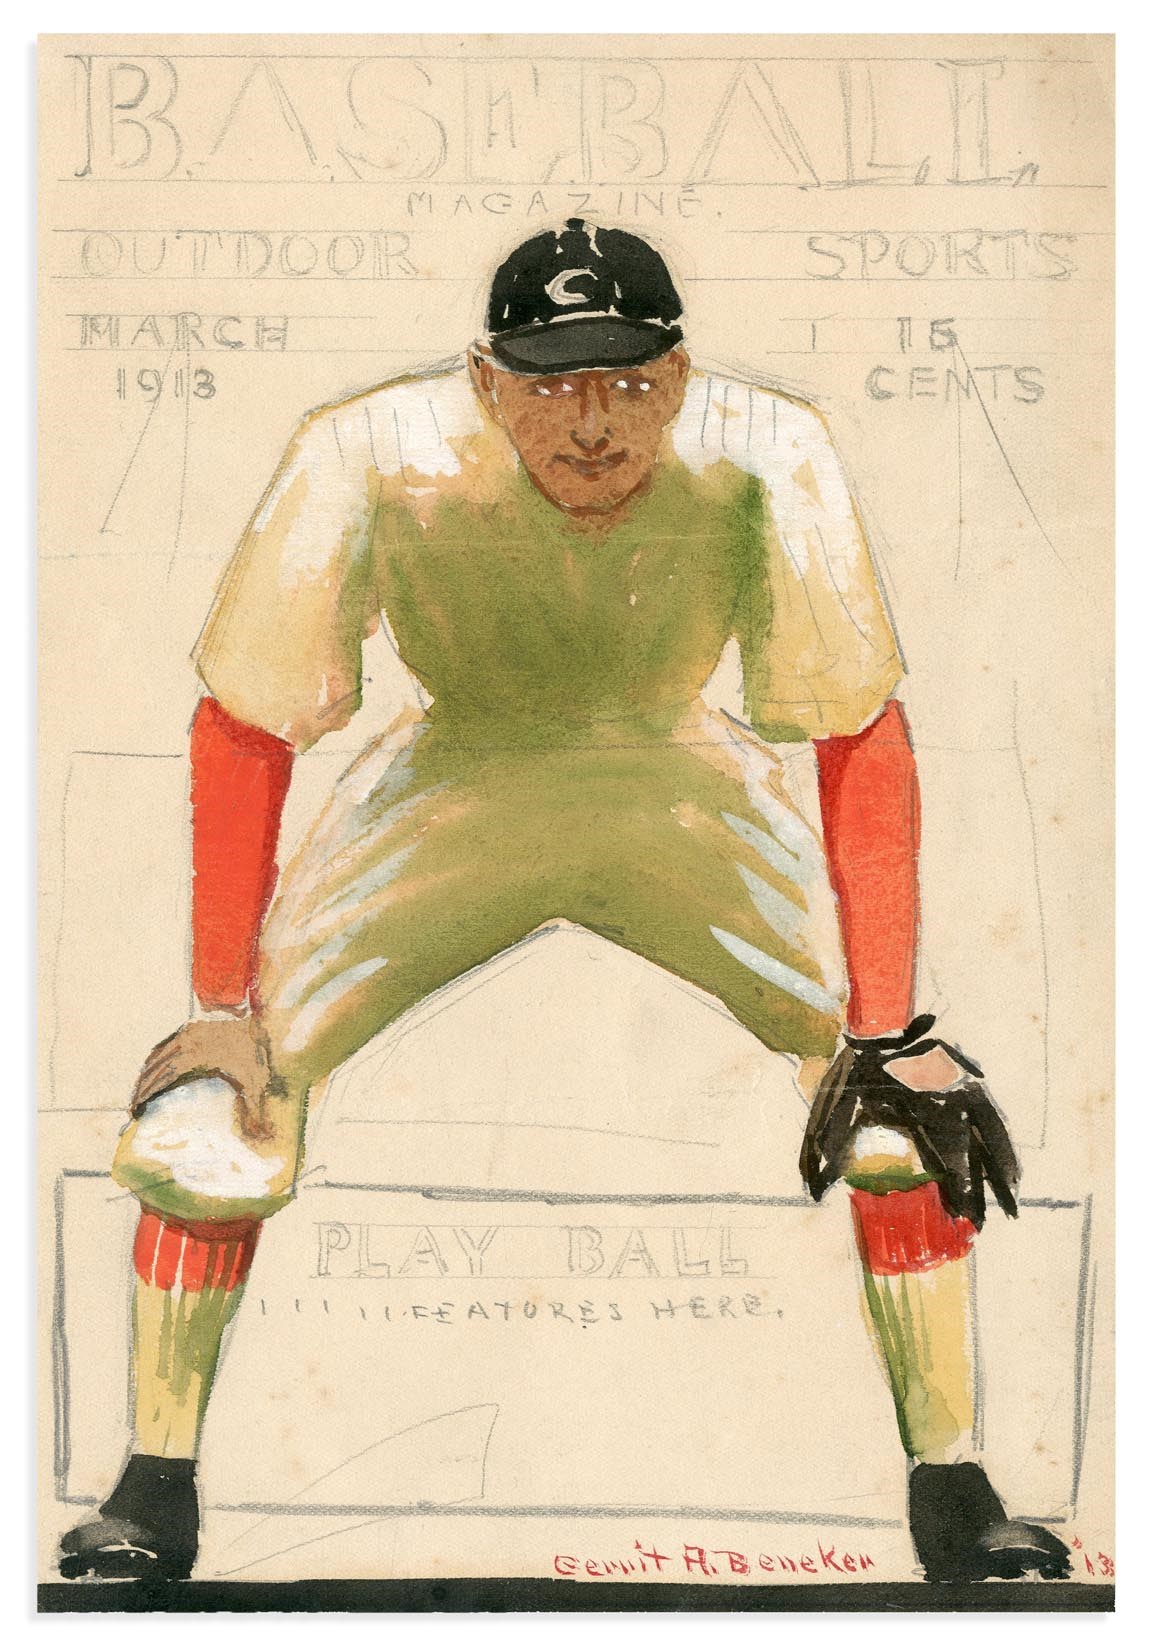 The Baseball Magazine Original Art - "Ty Cobb" 1913 Baseball Magazine Cover Art Study by Gerrit Beneker (1882-1934)